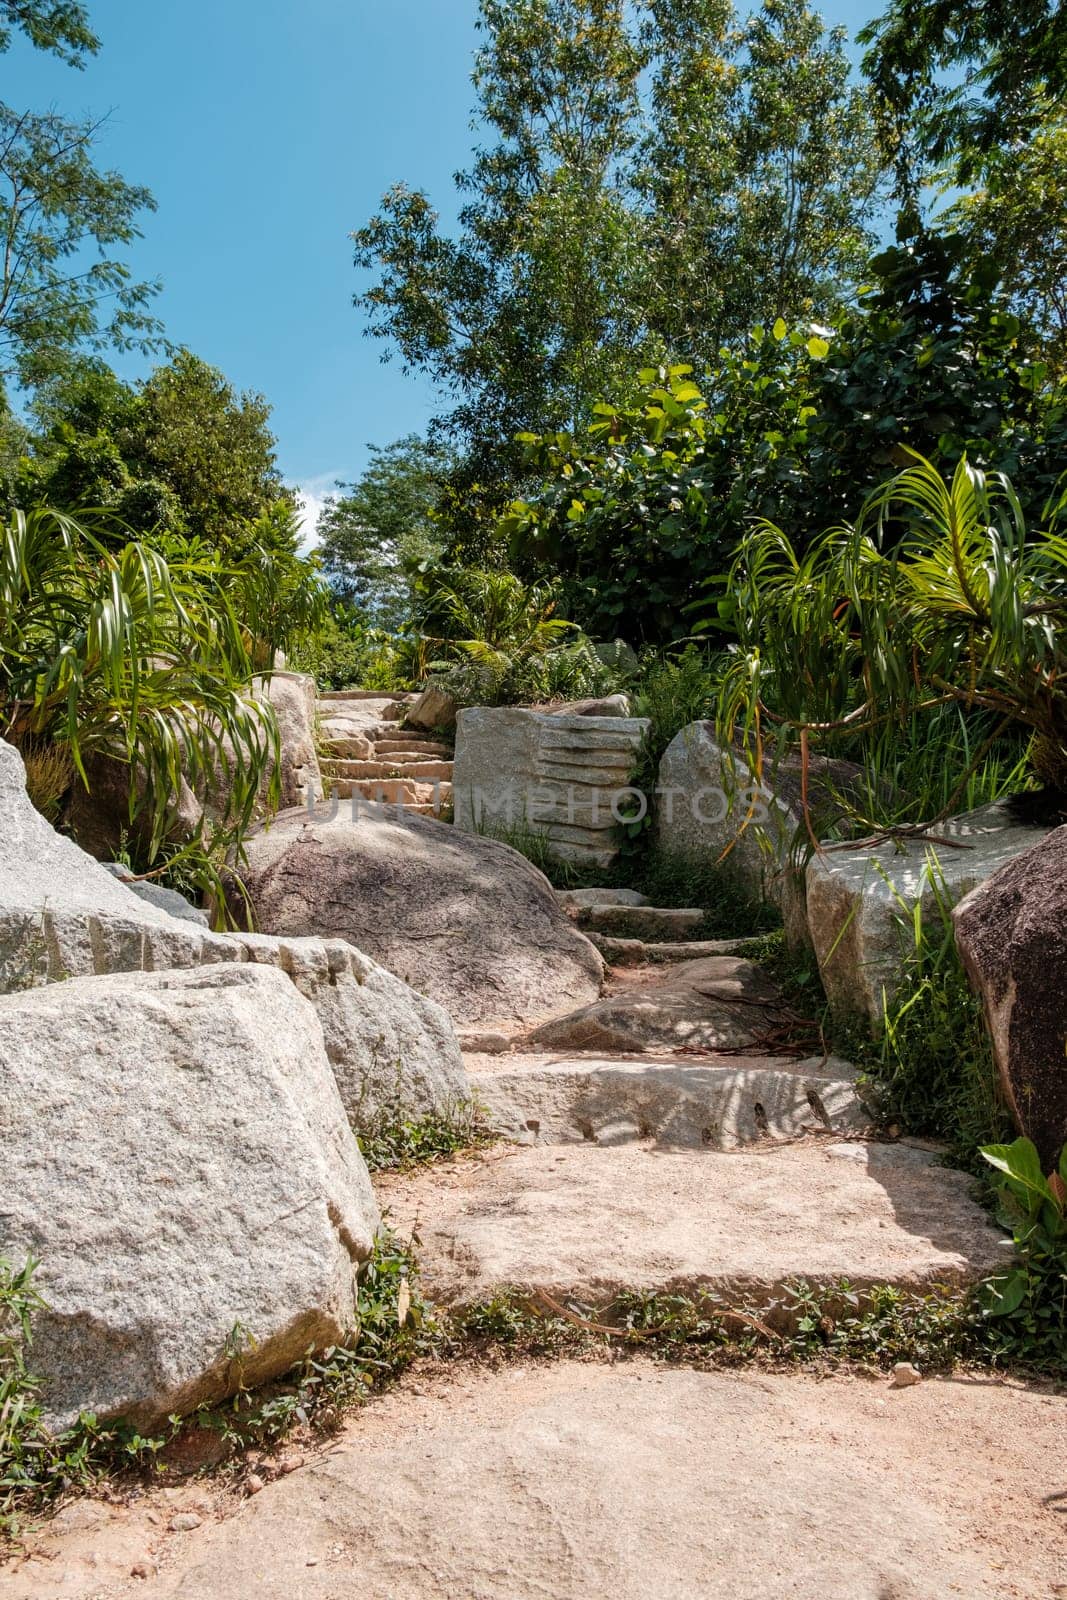 Stone Stairs Ascending Hiking Trail by jinhongljh